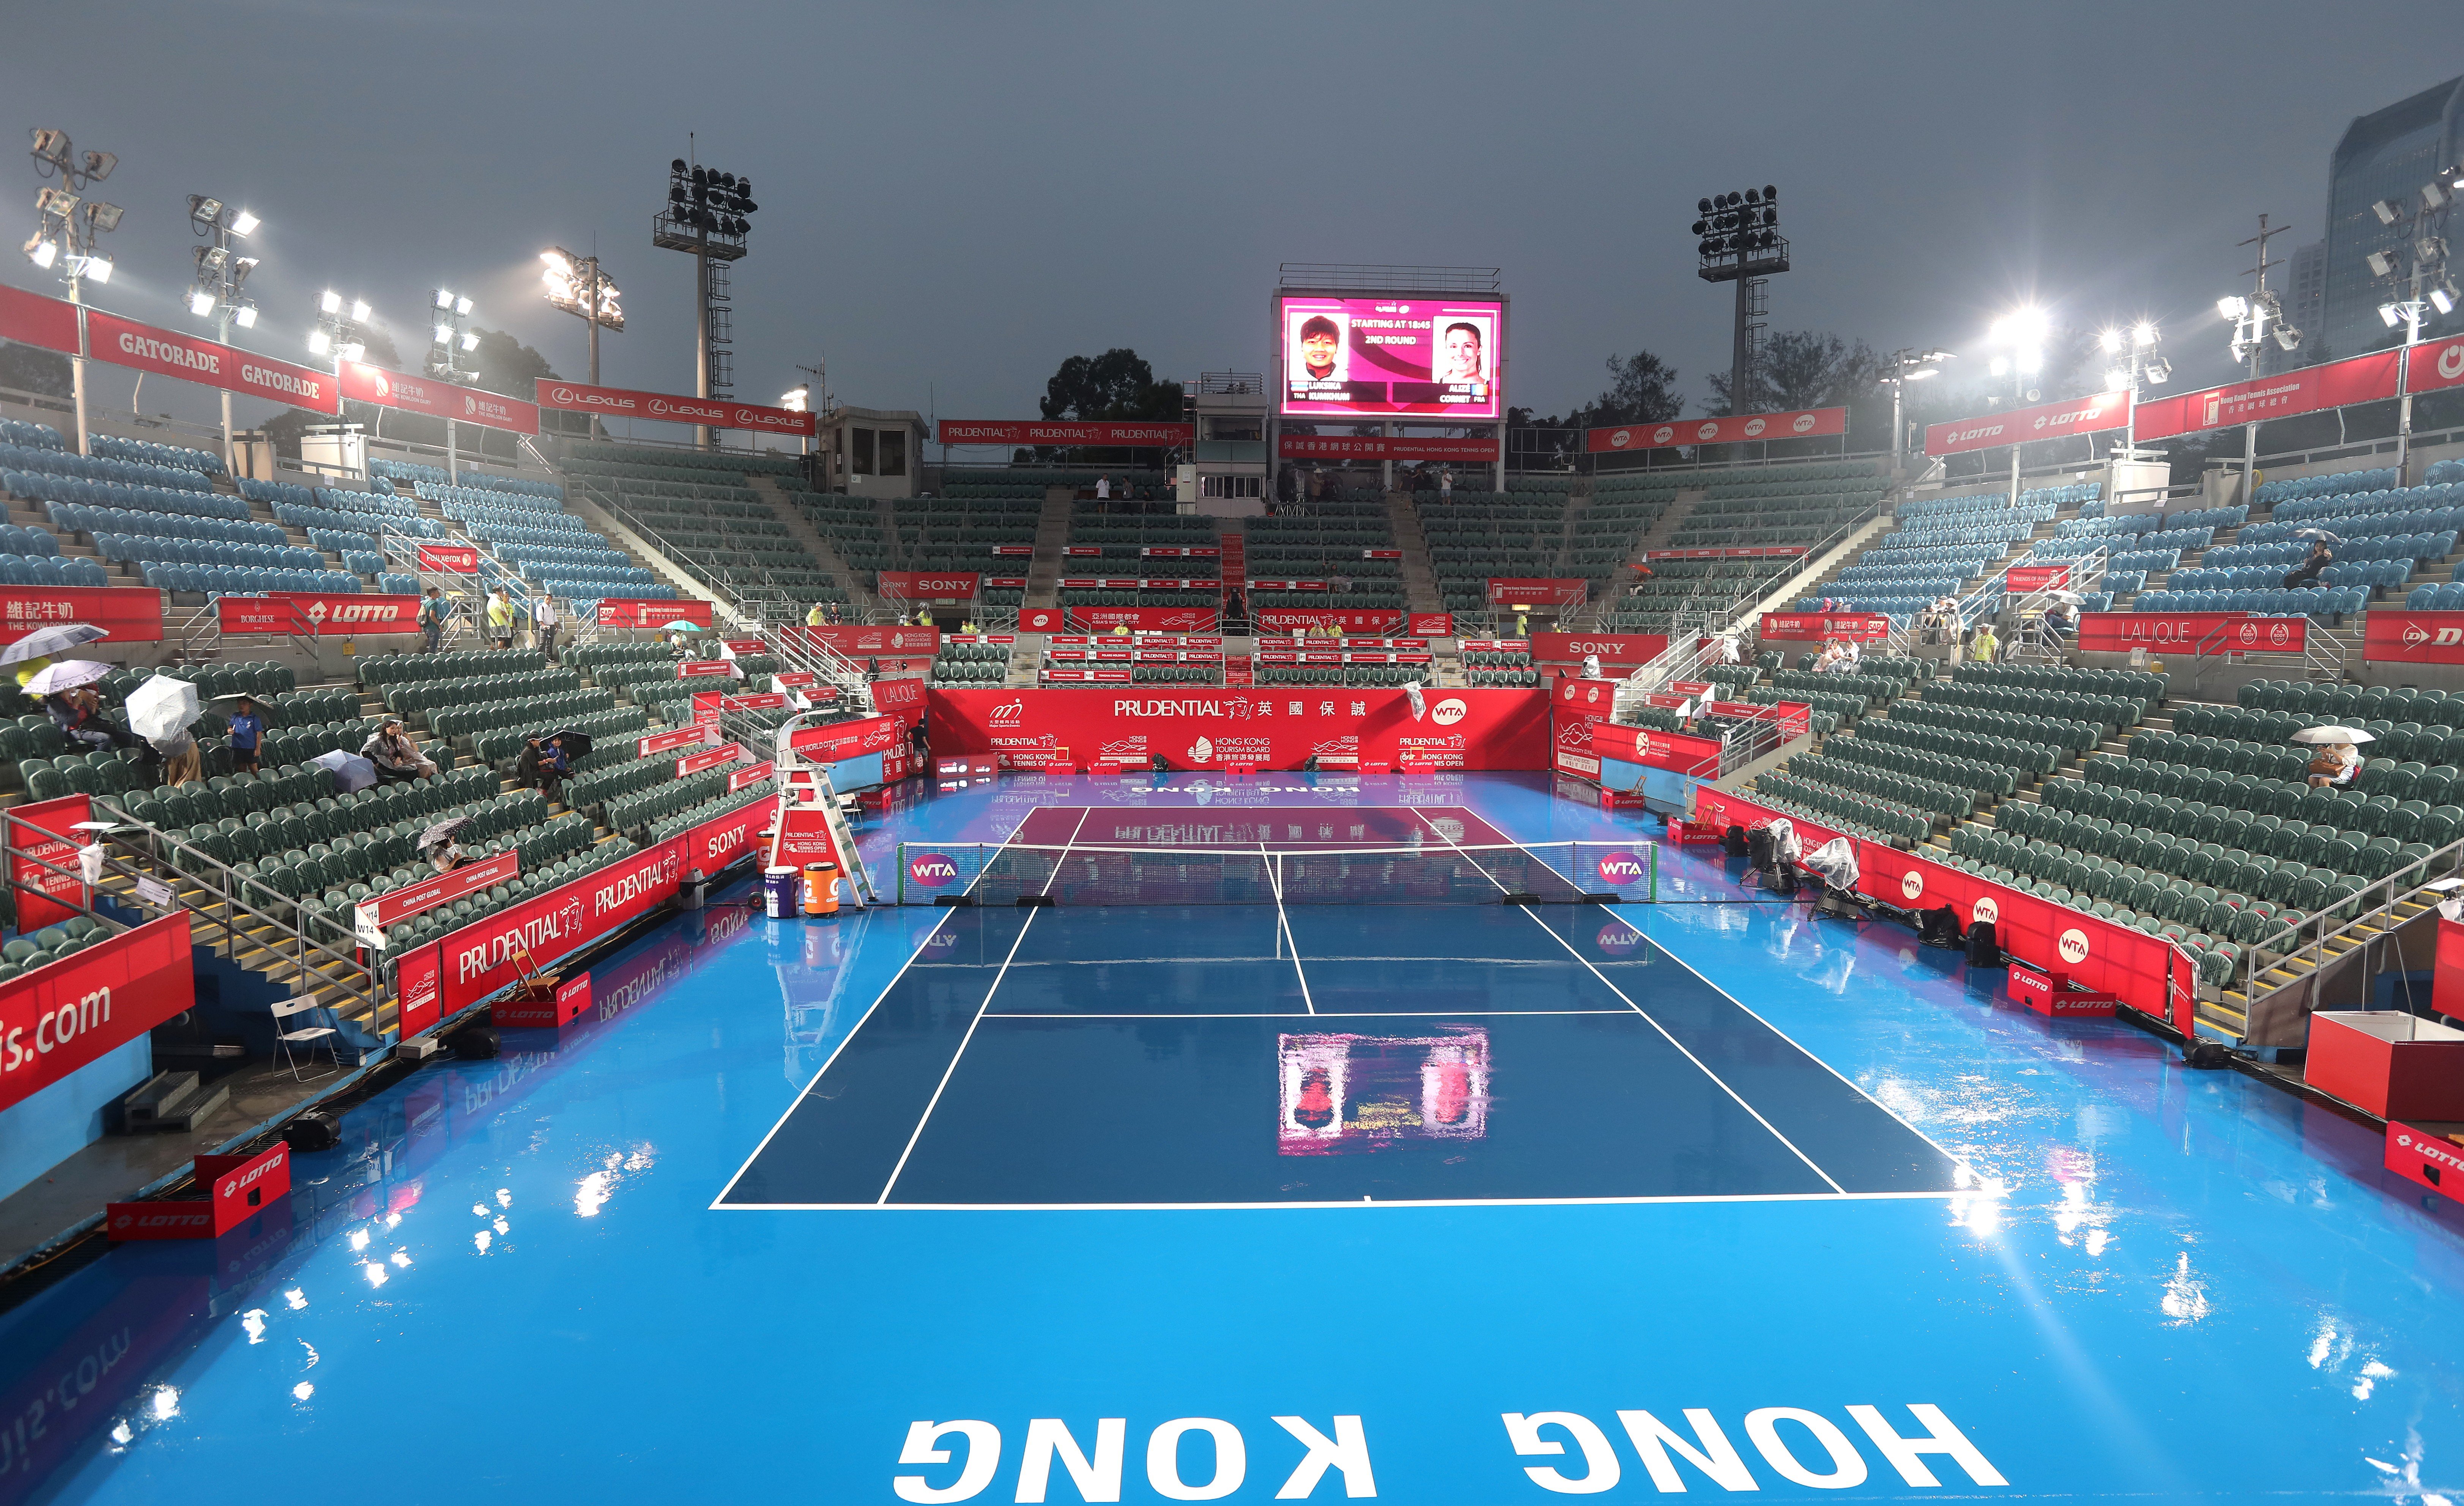 The 2019 edition of the Hong Kong Tennis Open has been postponed. Photo: Xiaomei Chen